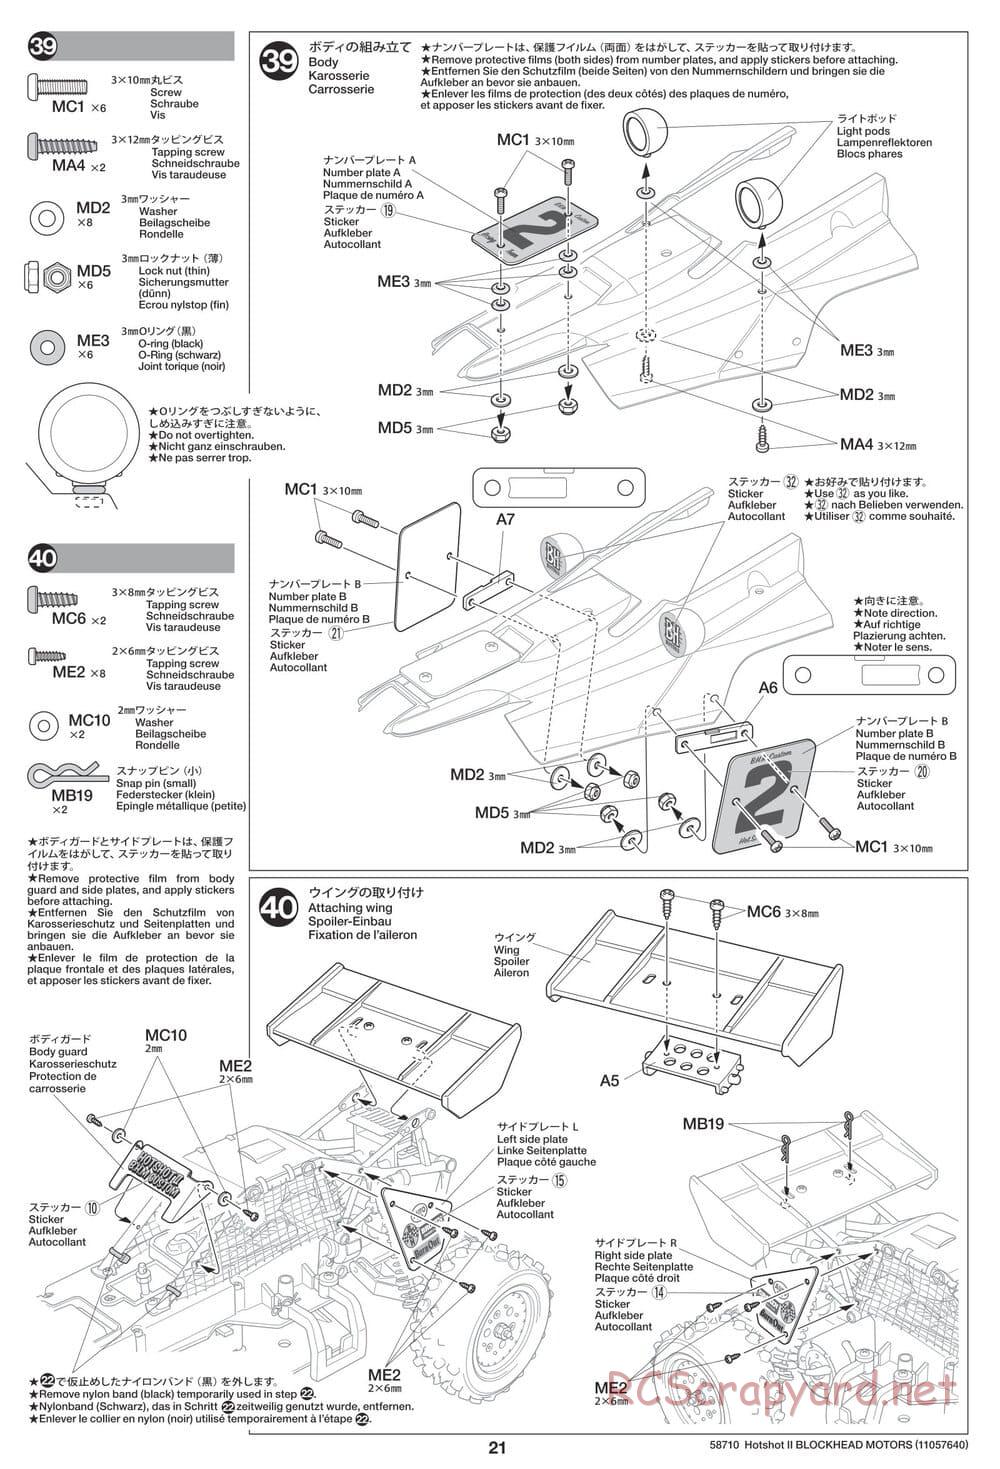 Tamiya - Hotshot II Blockhead Motors - HS Chassis - Manual - Page 21